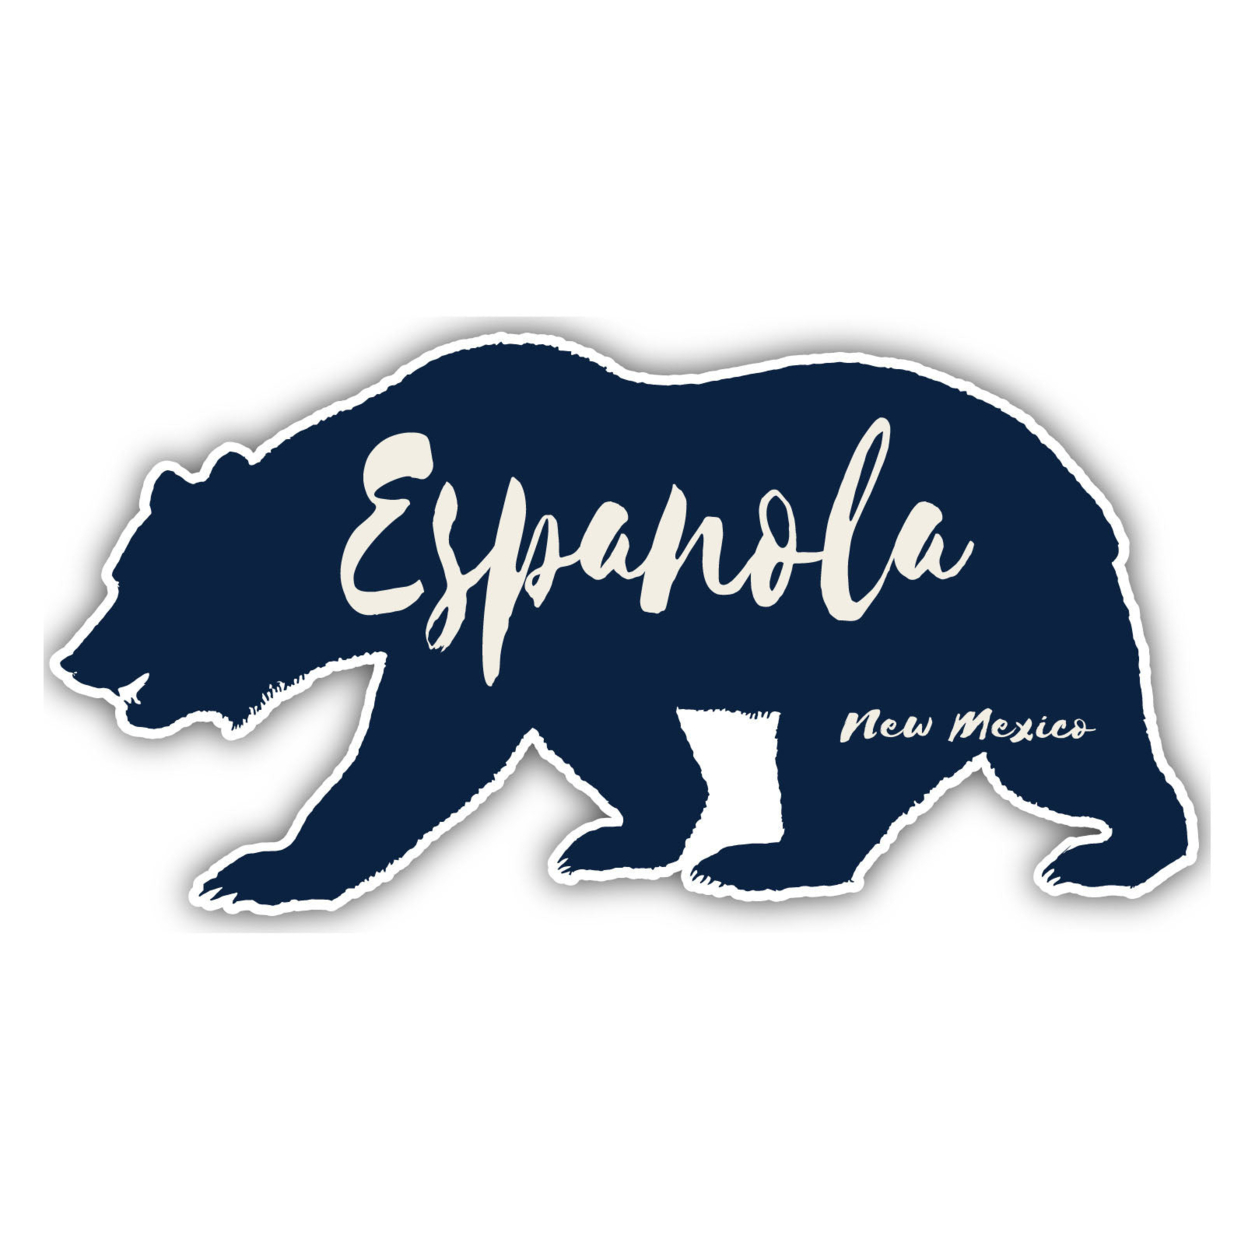 Espanola New Mexico Souvenir Decorative Stickers (Choose Theme And Size) - 4-Pack, 8-Inch, Bear